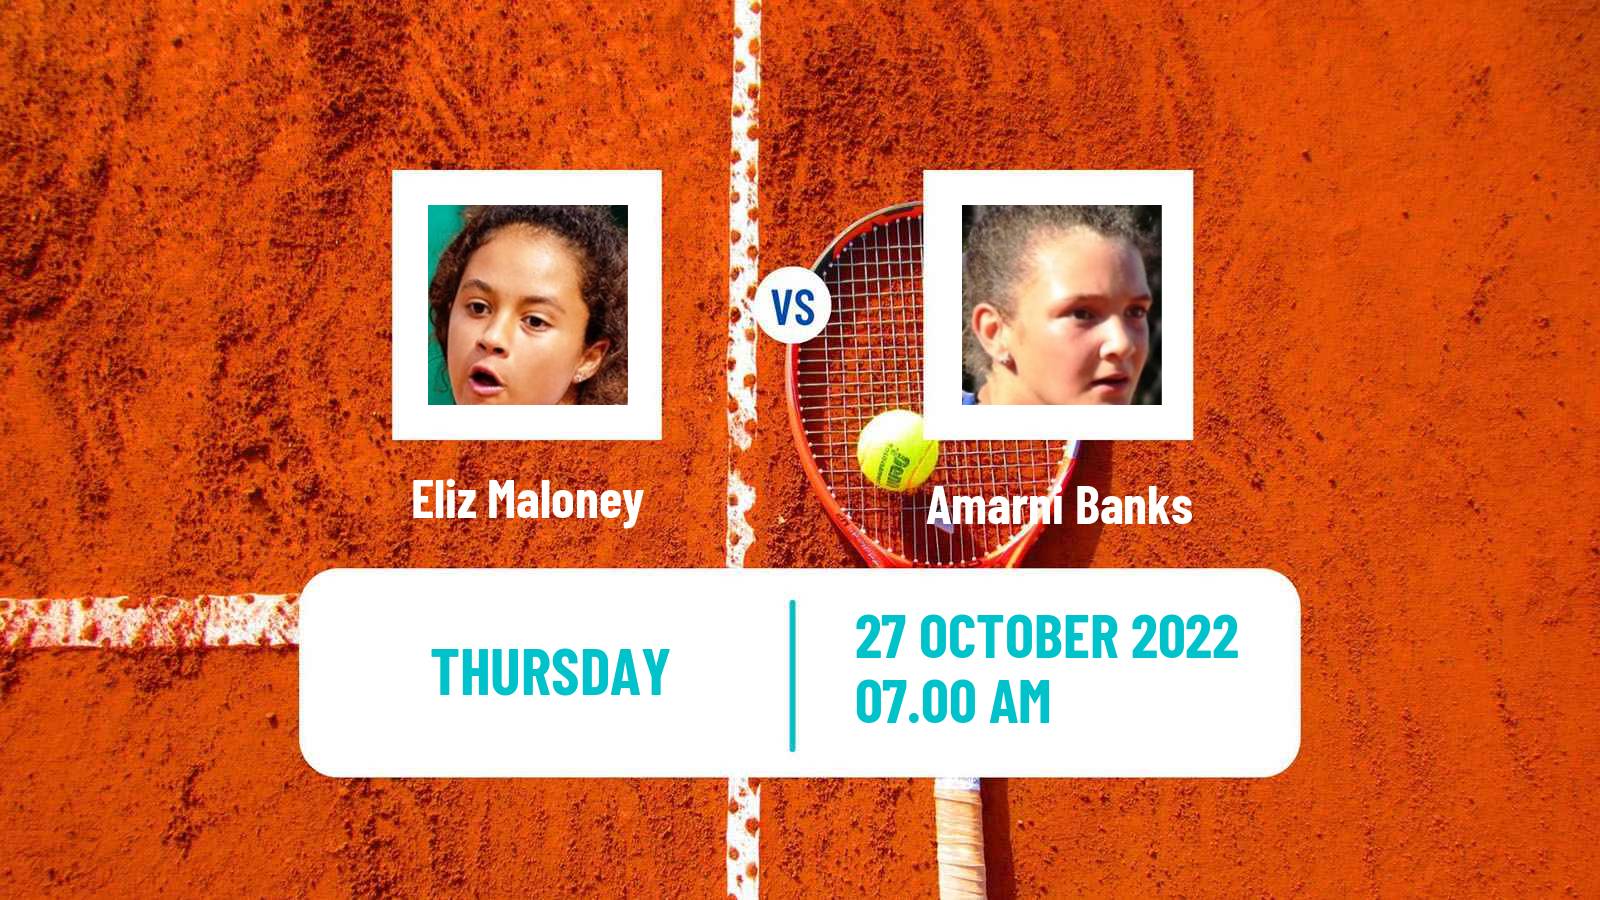 Tennis ITF Tournaments Eliz Maloney - Amarni Banks